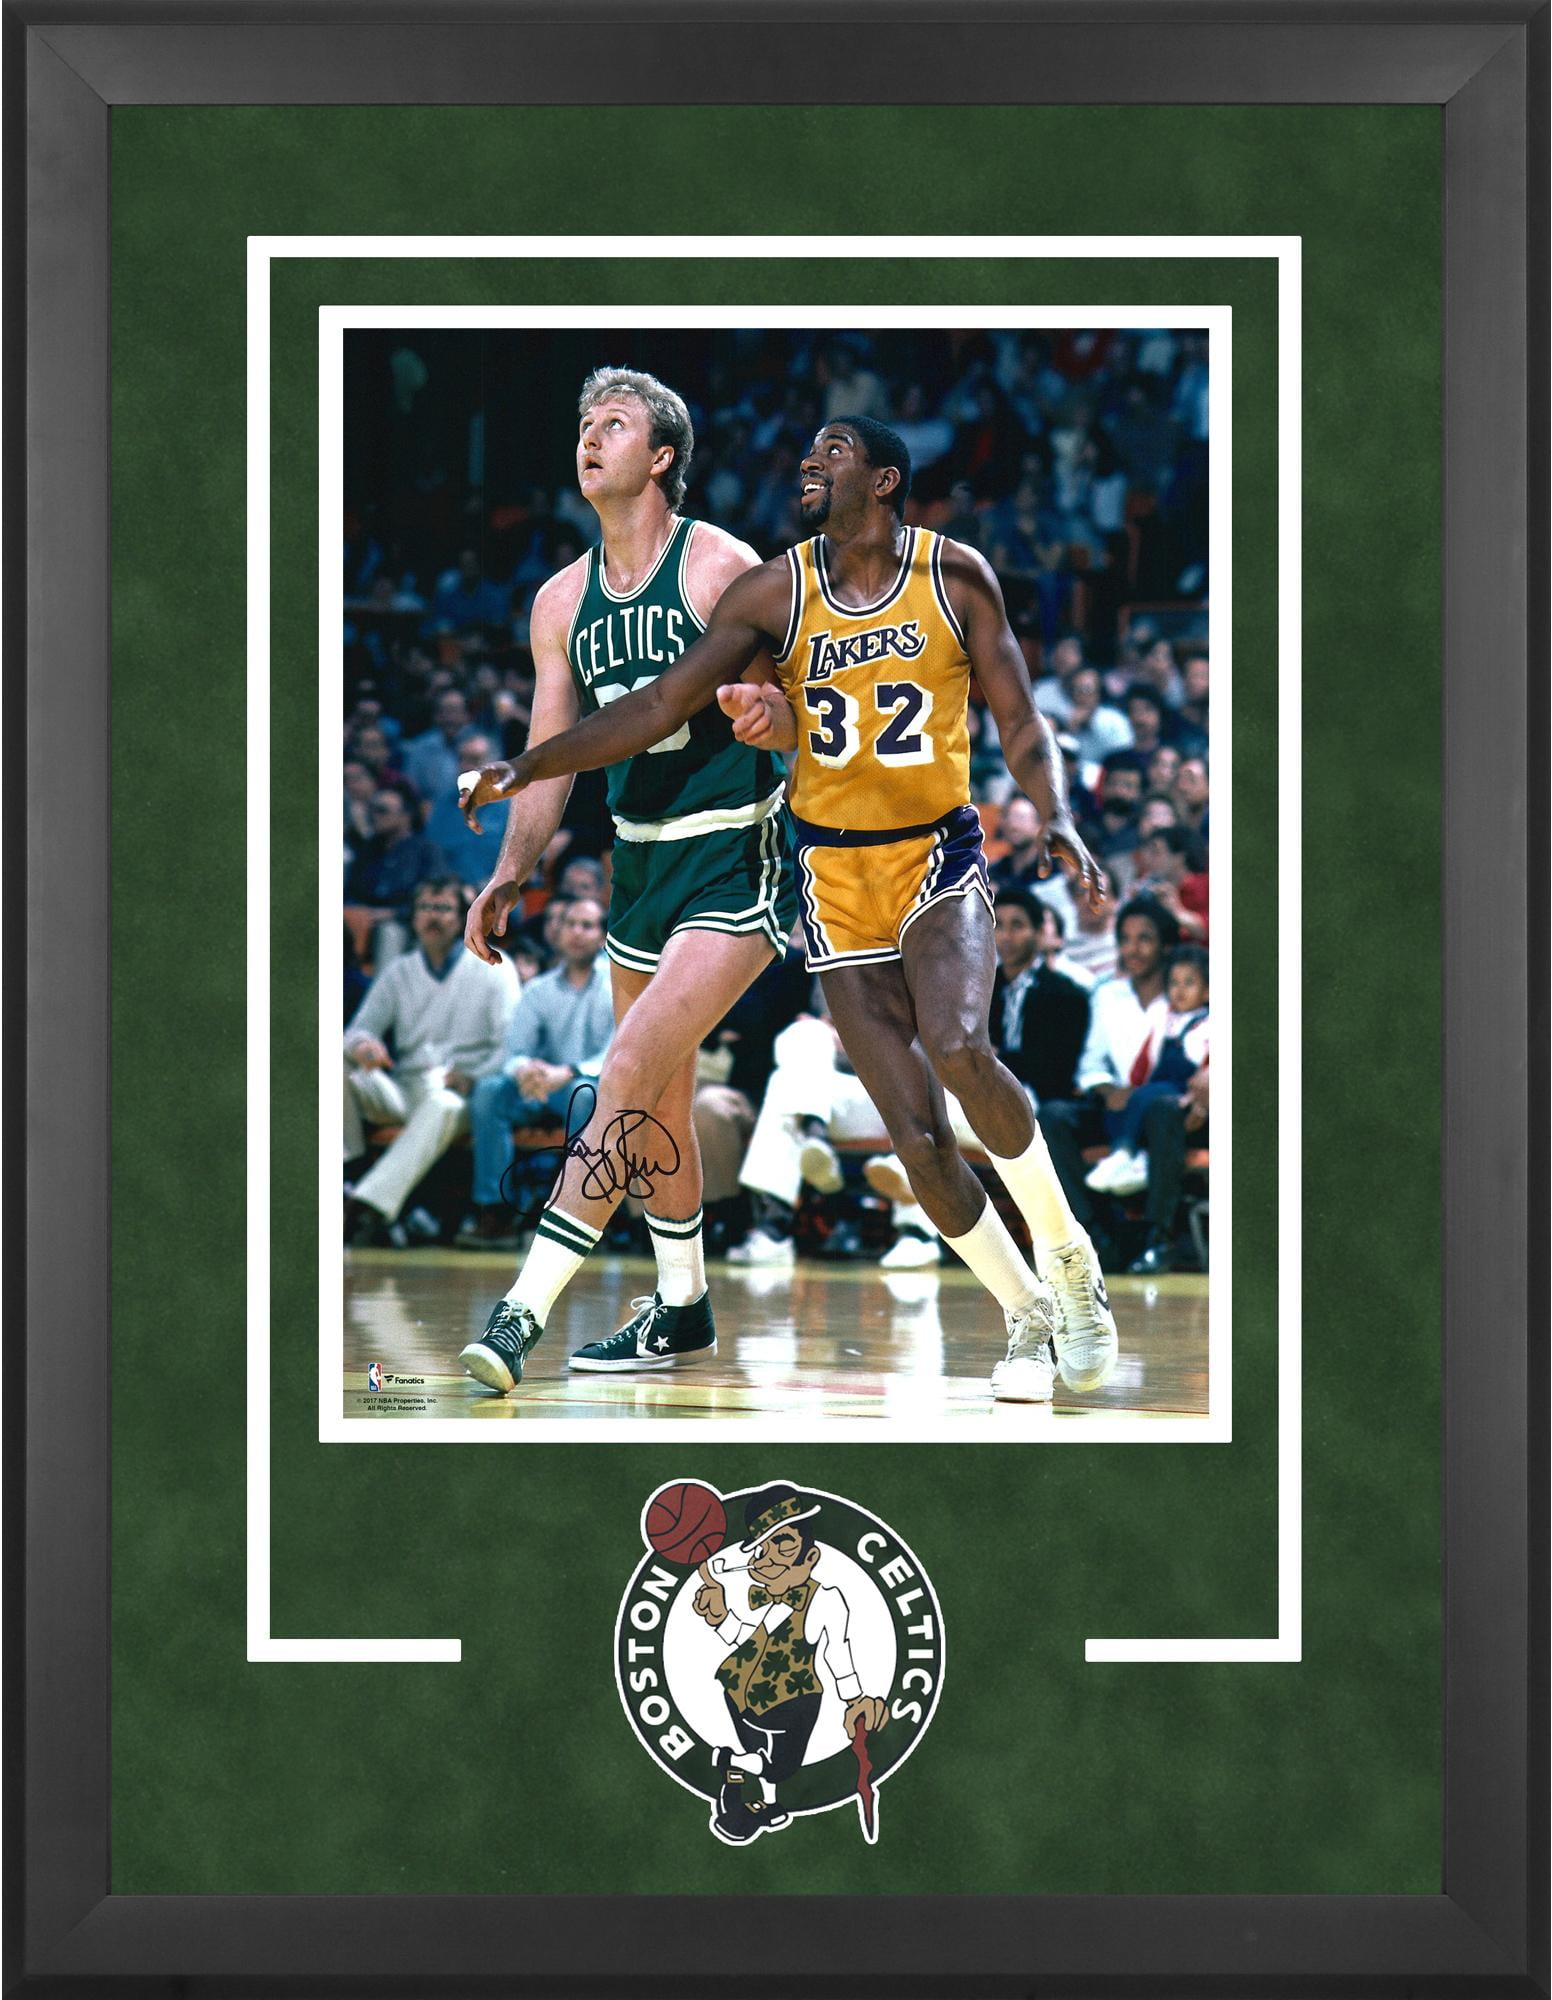 Fanatics Authentic Certified Framed Larry Bird Boston Celtics Autographed 16 x 20 Rebound vs Magic Johnson Photograph 